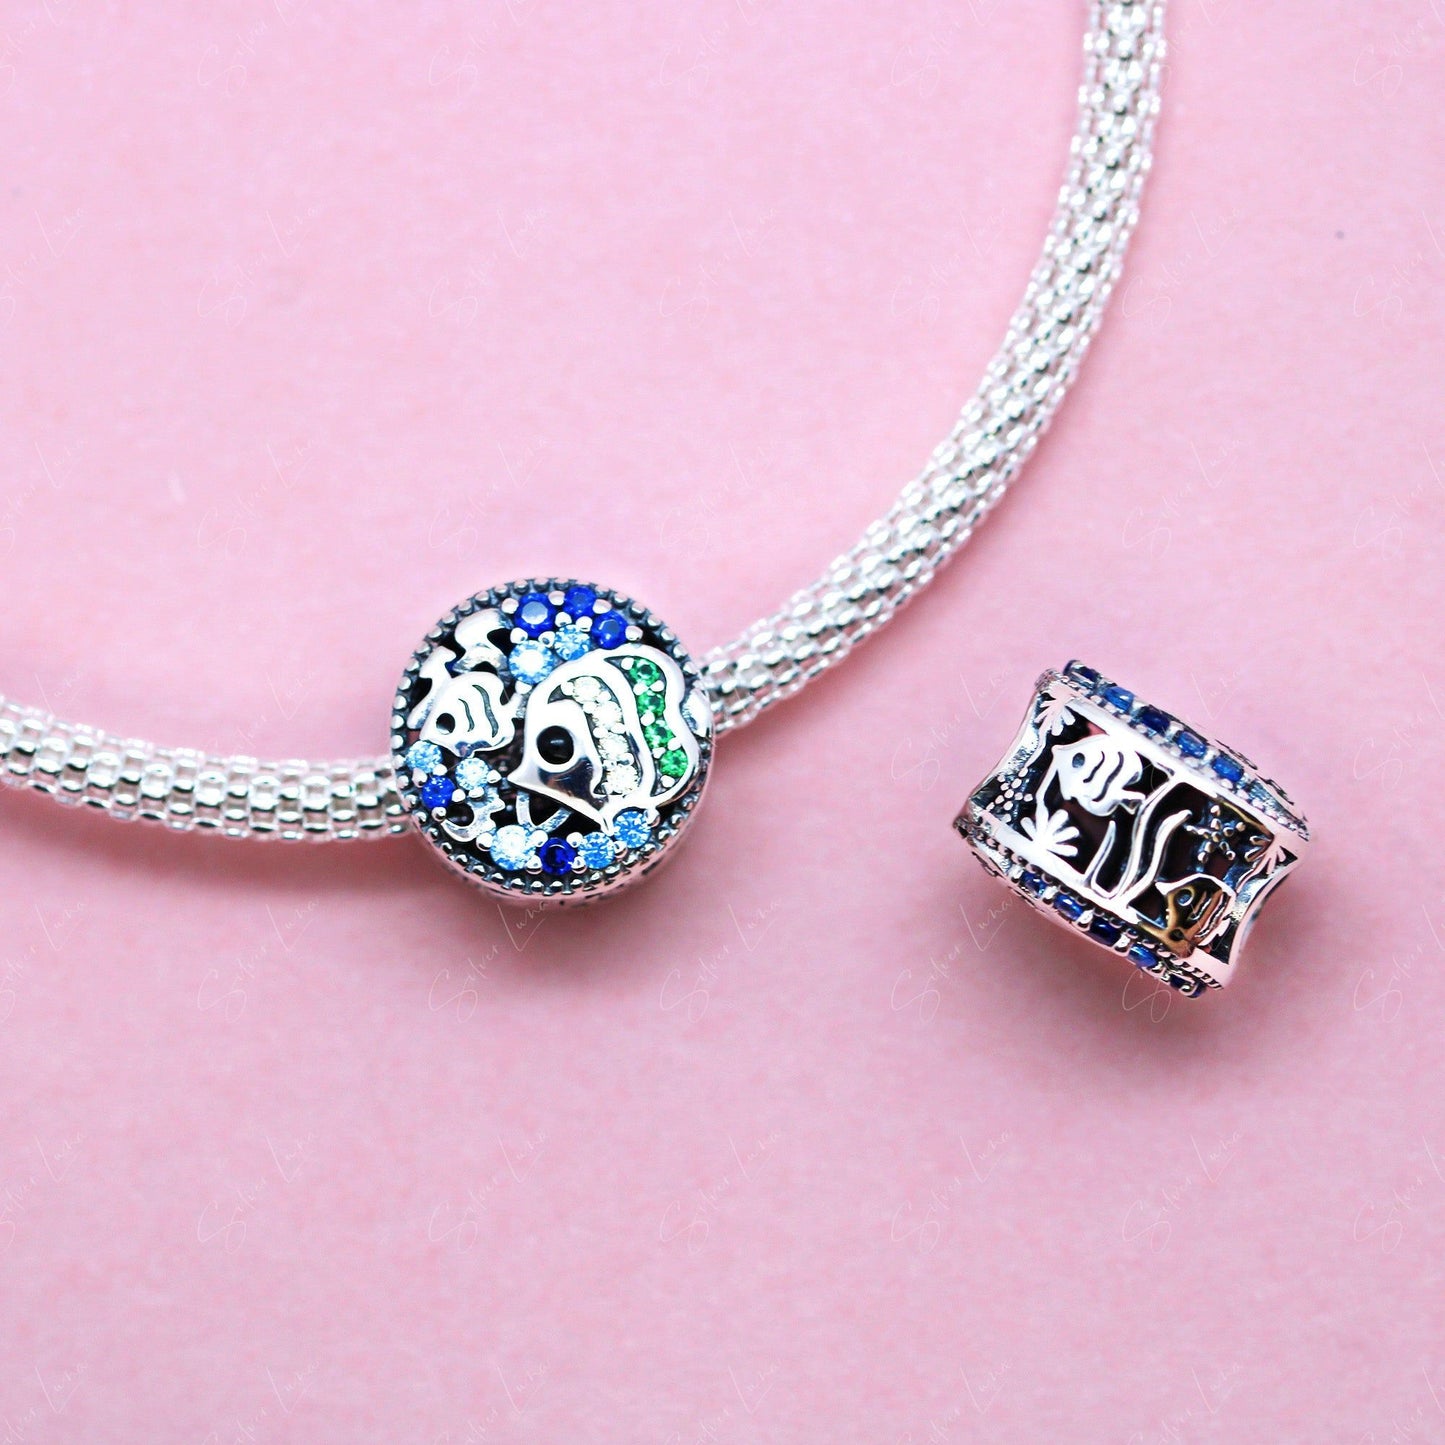 Ocean fish bead charm for bracelet in sterling silver